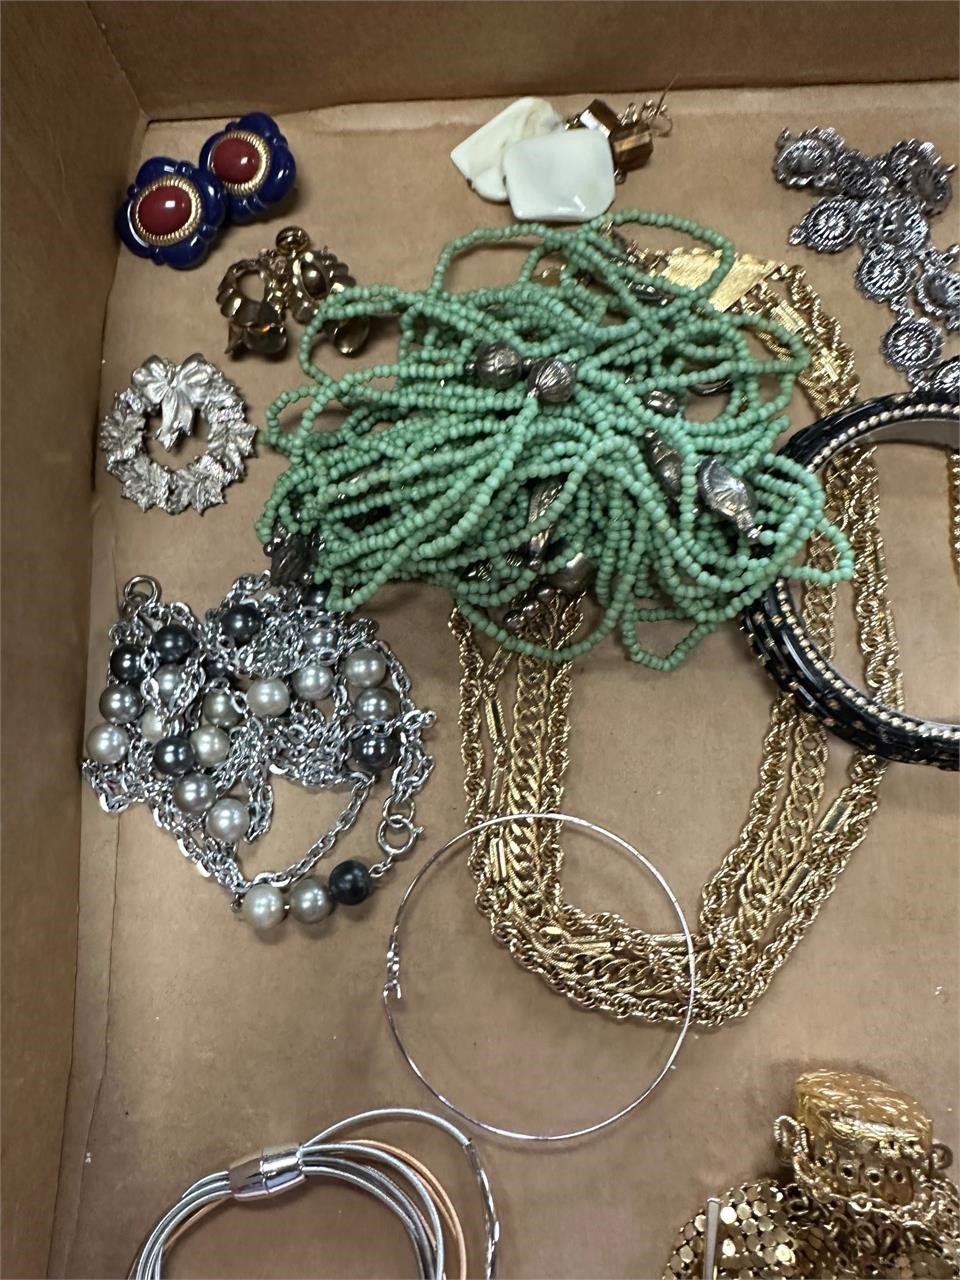 Unique Finds: Antiques, Jewelry, Art & Apparel